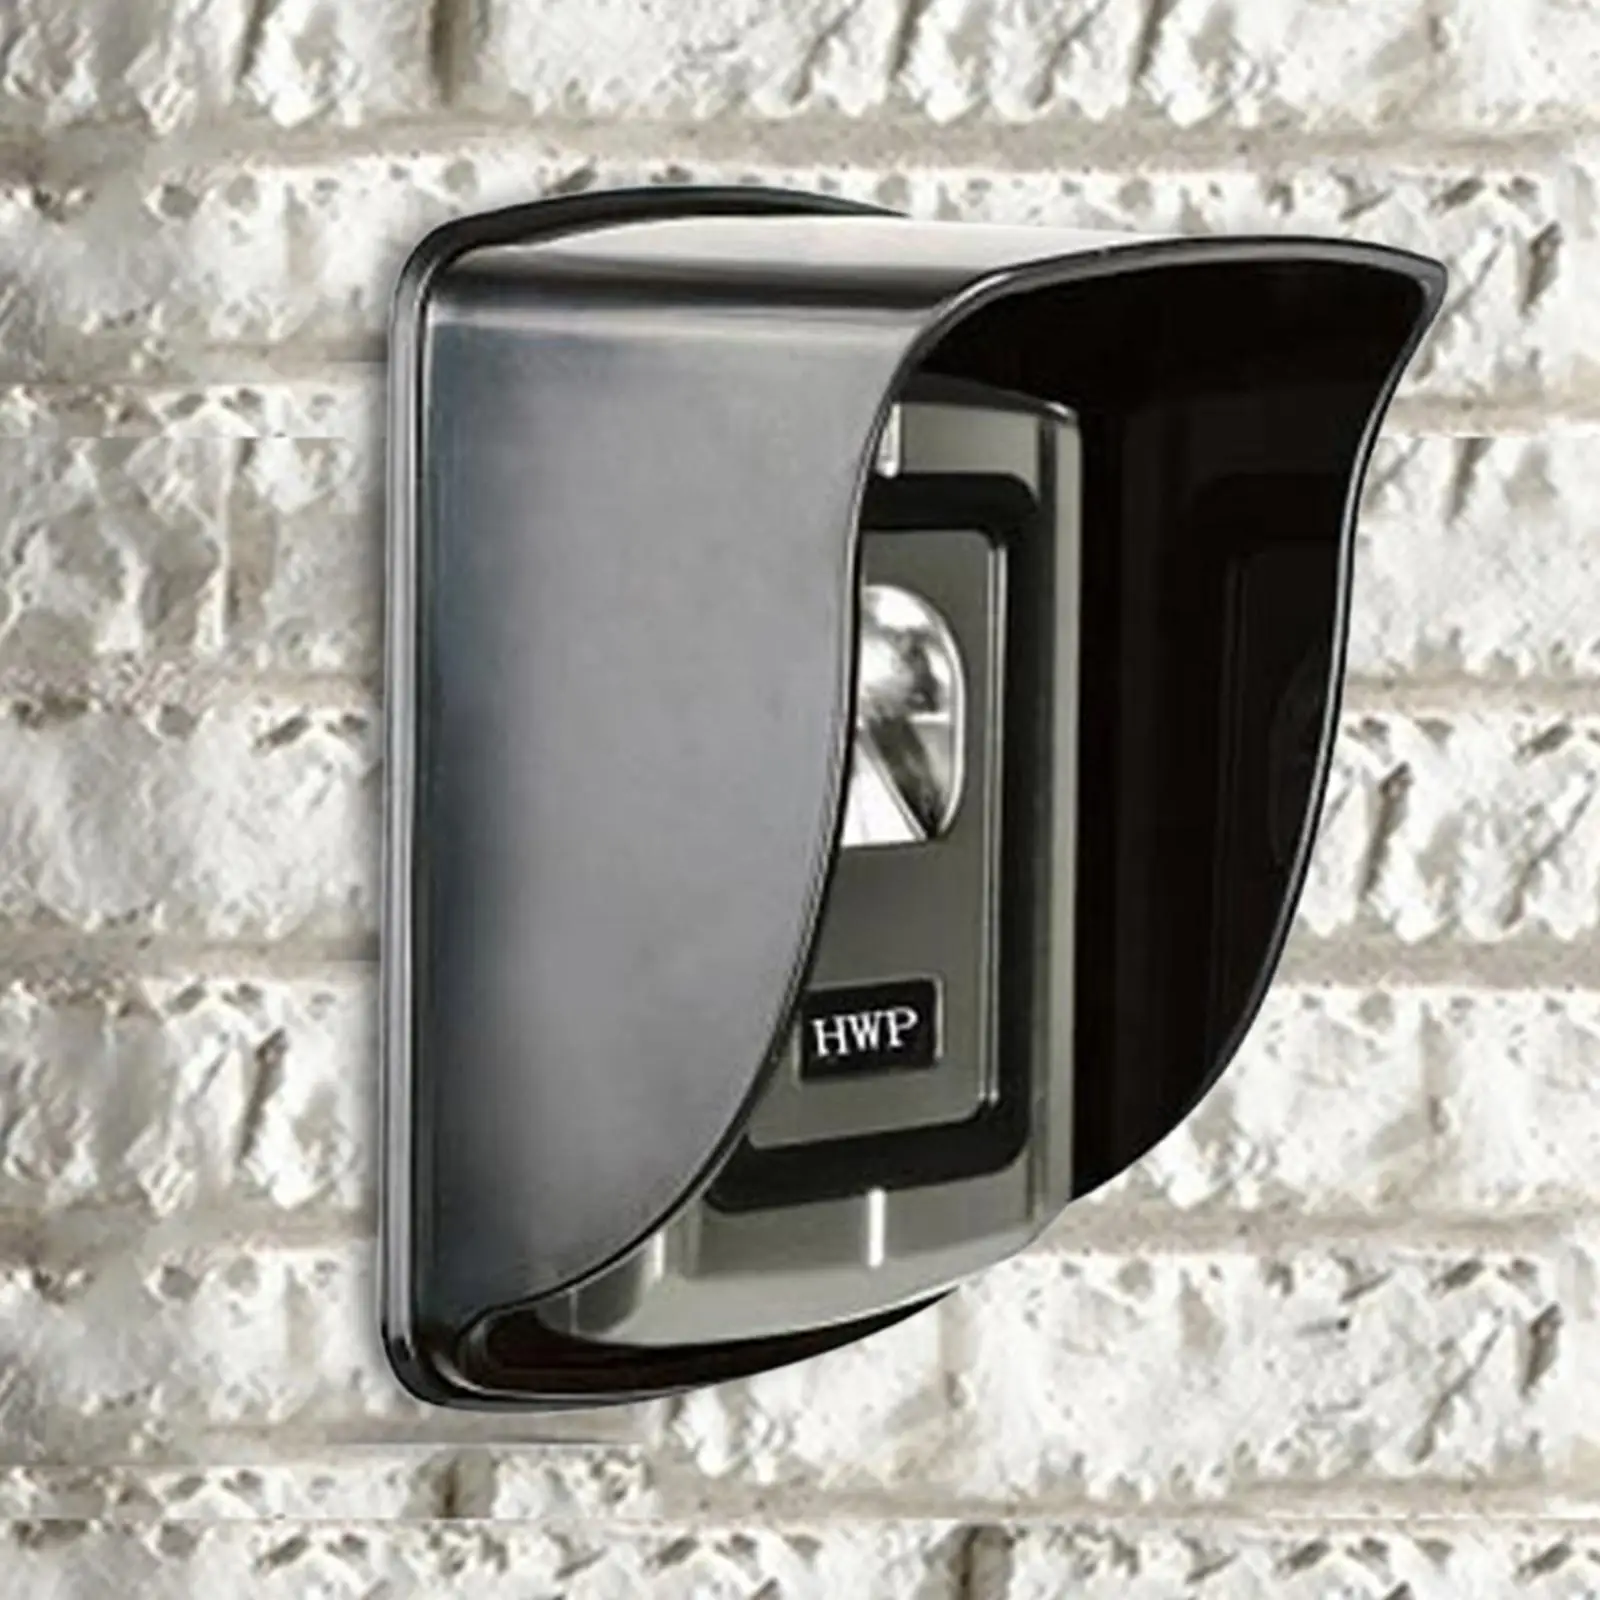 Doorbell Rain Cover Shell Waterproof for Door Phone Intercom Fingerprint Access Controller Access Control Keypads Video Doorbell